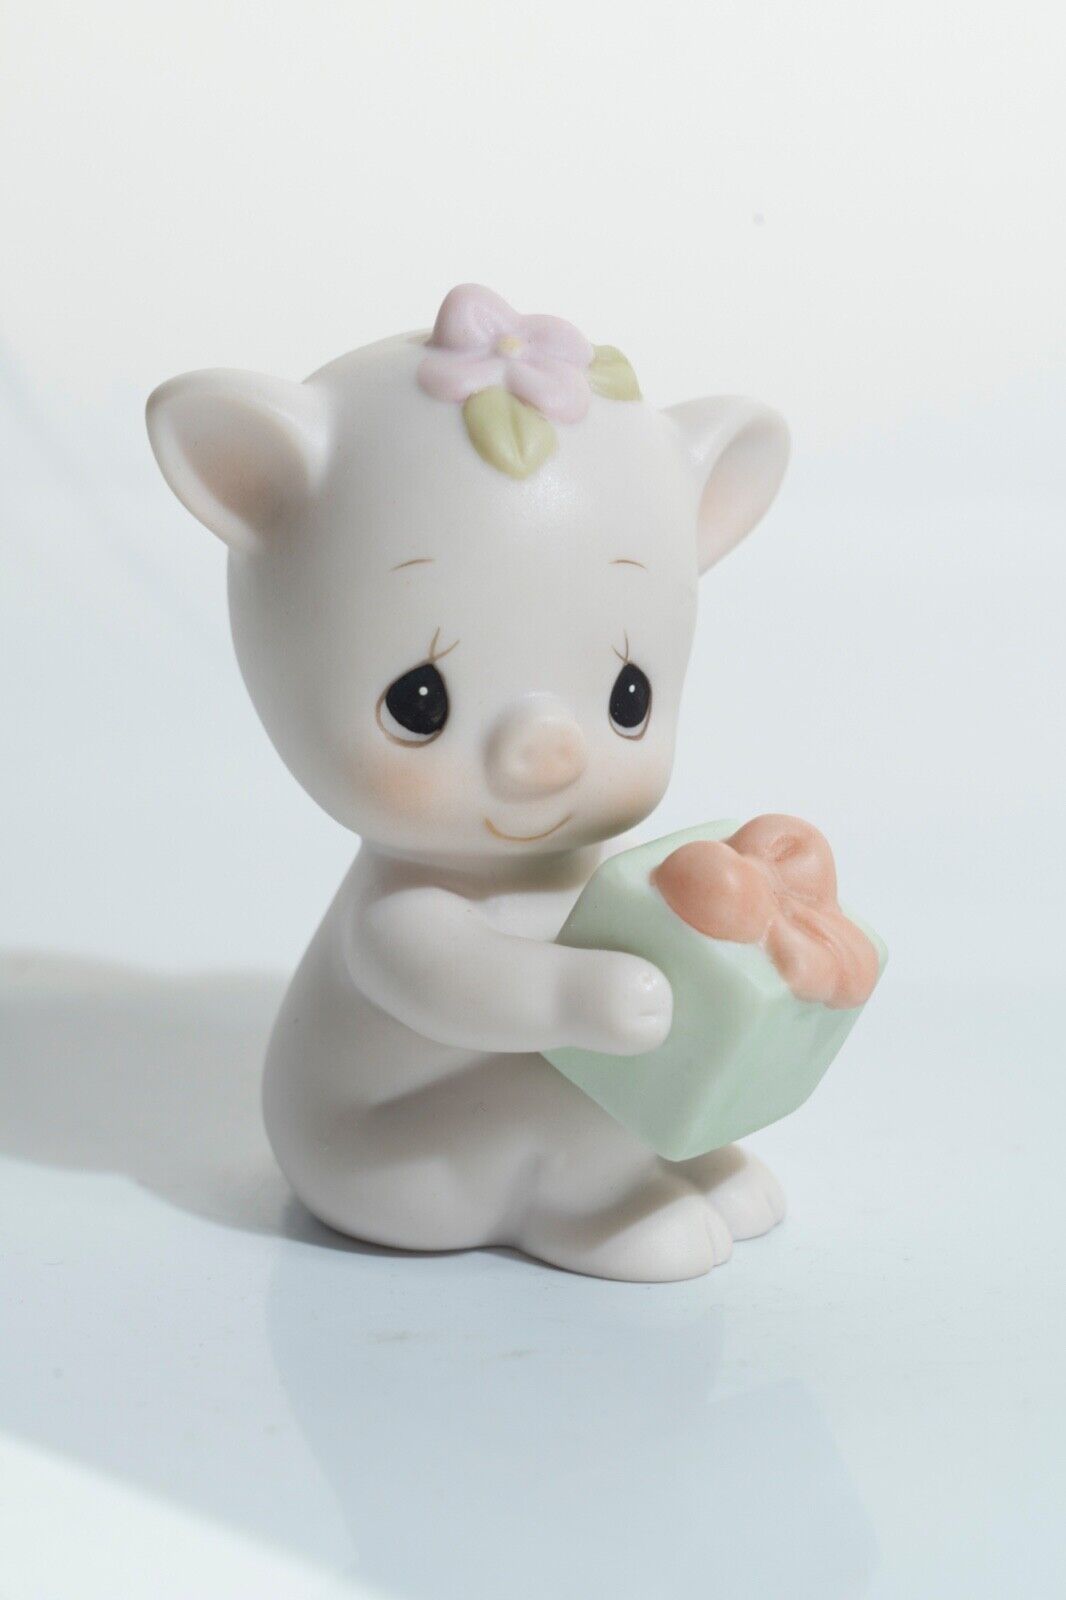 Vintage Precious Moments 1993 Pig Figurine #524506 Oinky Birthday Piggy w/ Gift